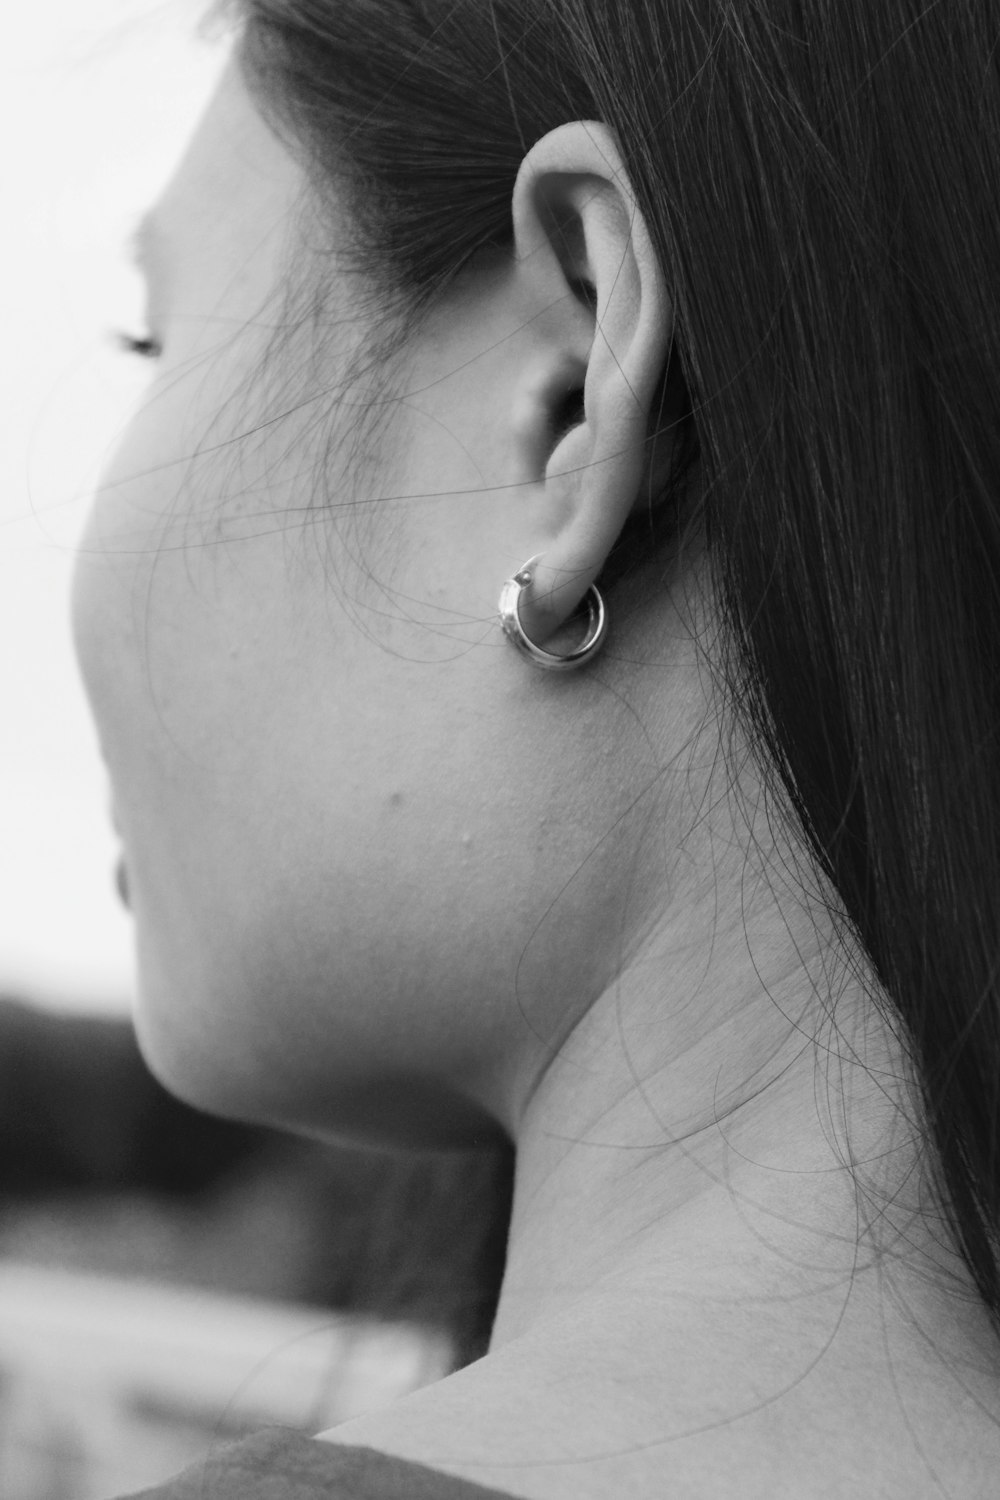 grayscale photography of woman wearing hoop earring